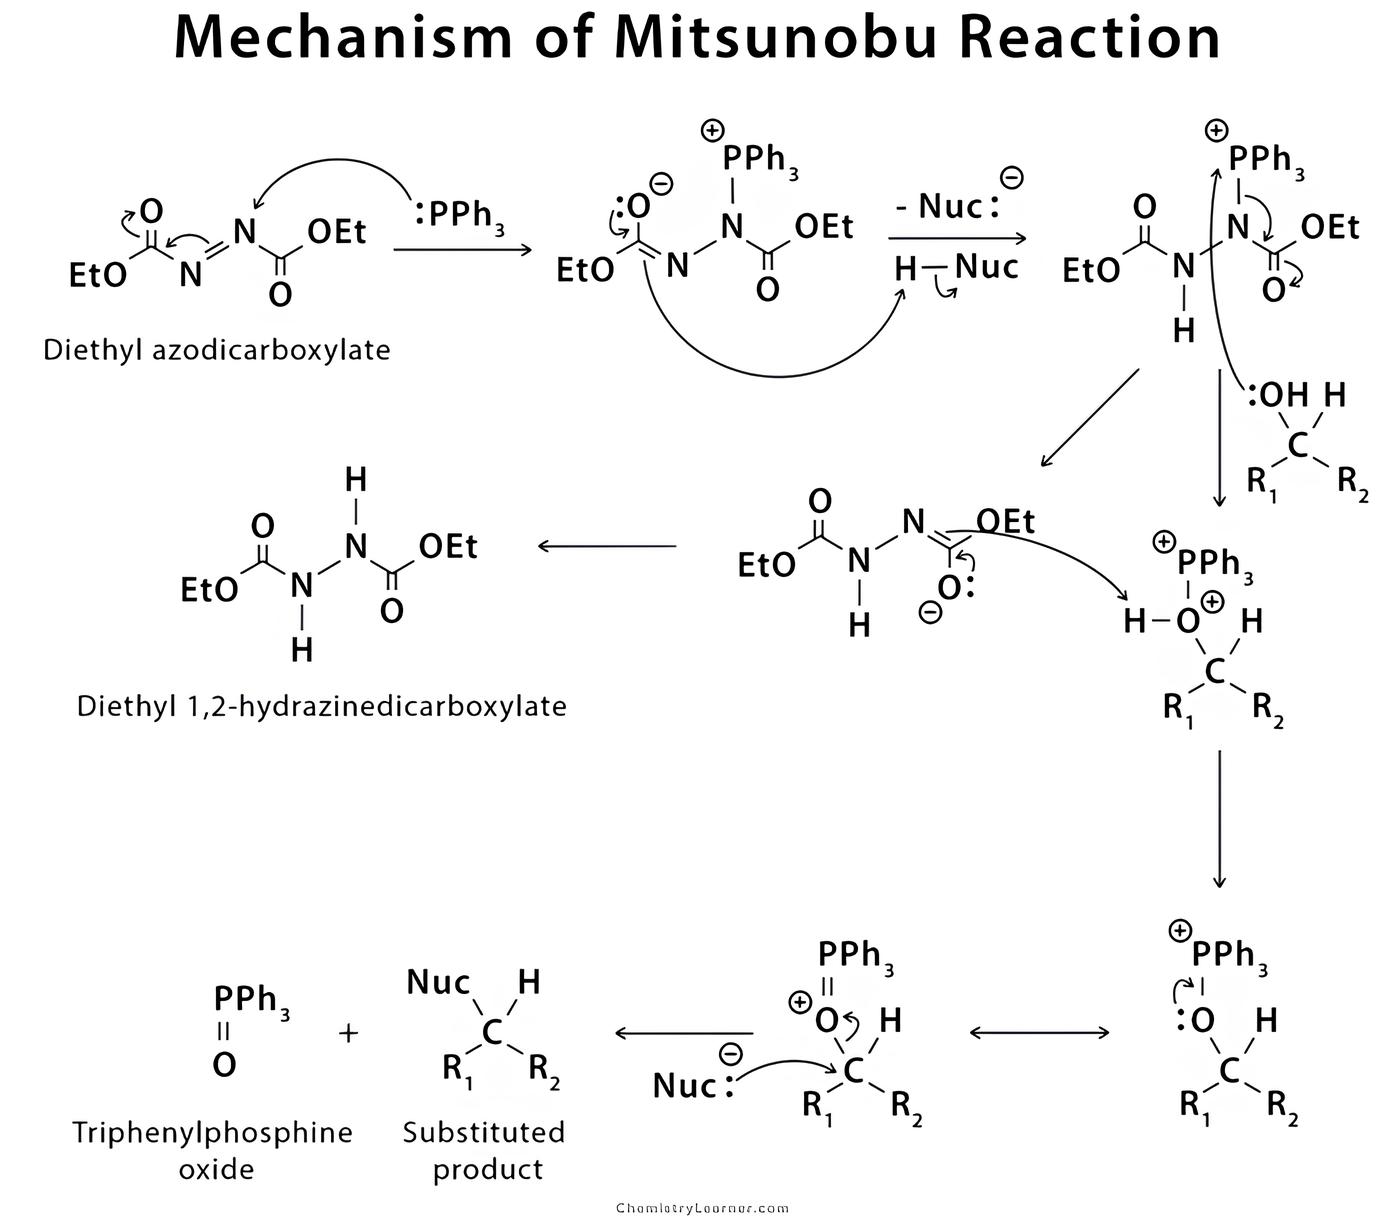 Mitsunobu Reaction